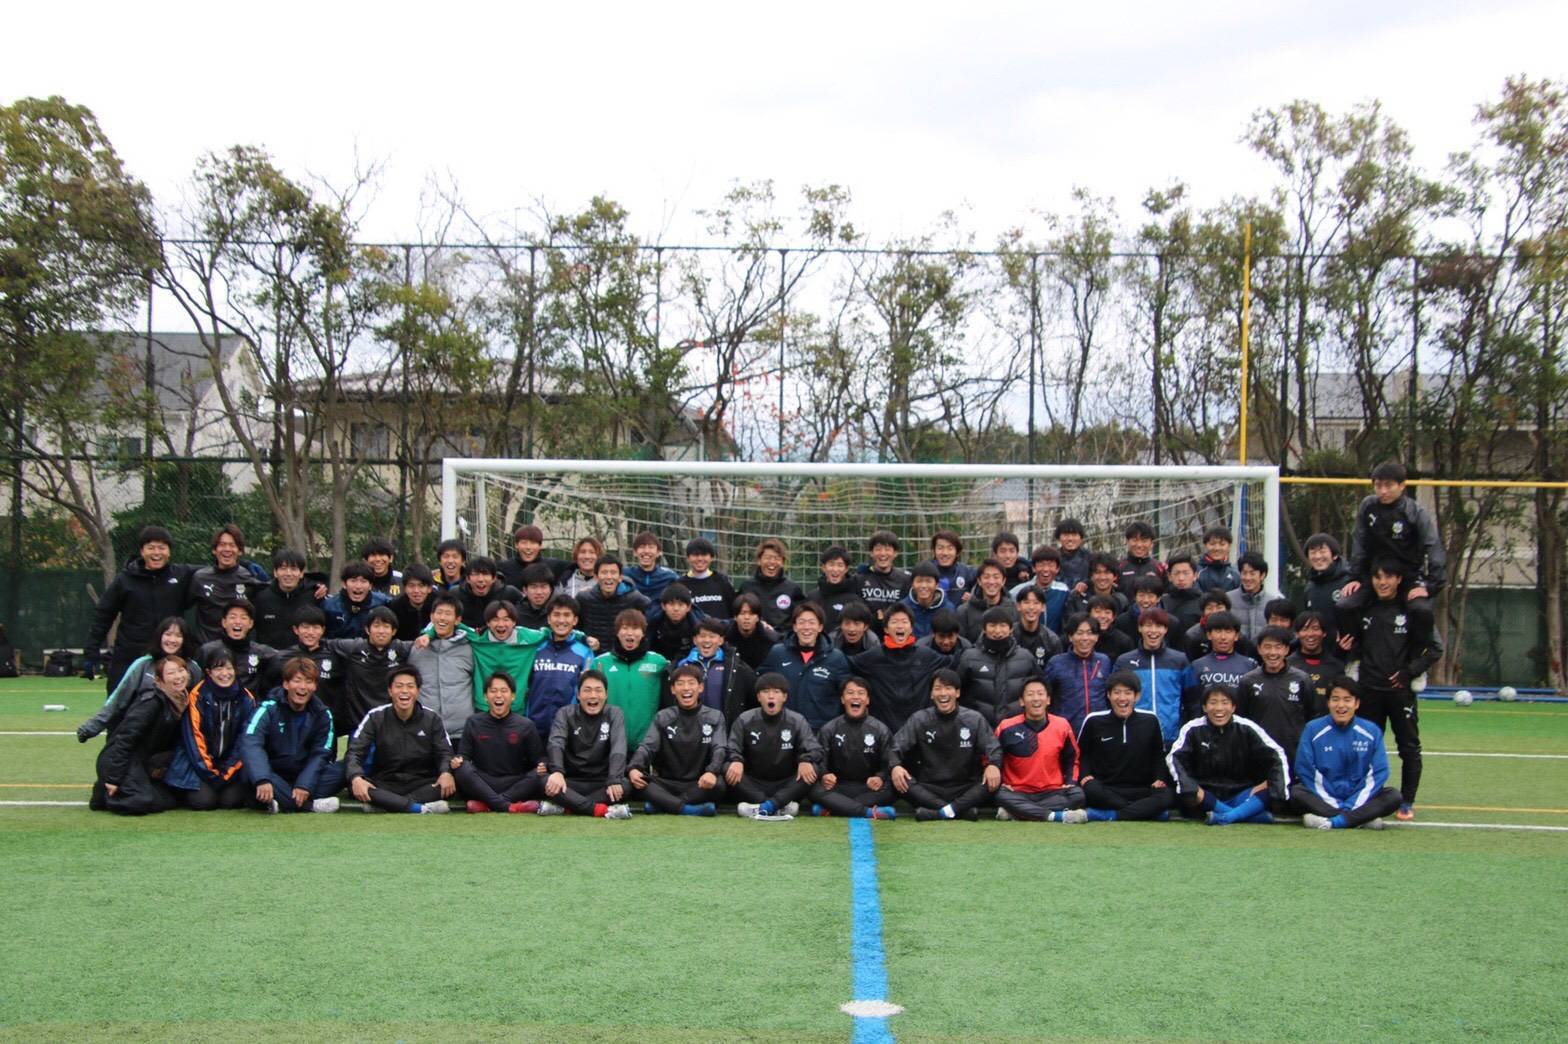 Ynufc 横浜国立大学サッカー部公式ホームページ